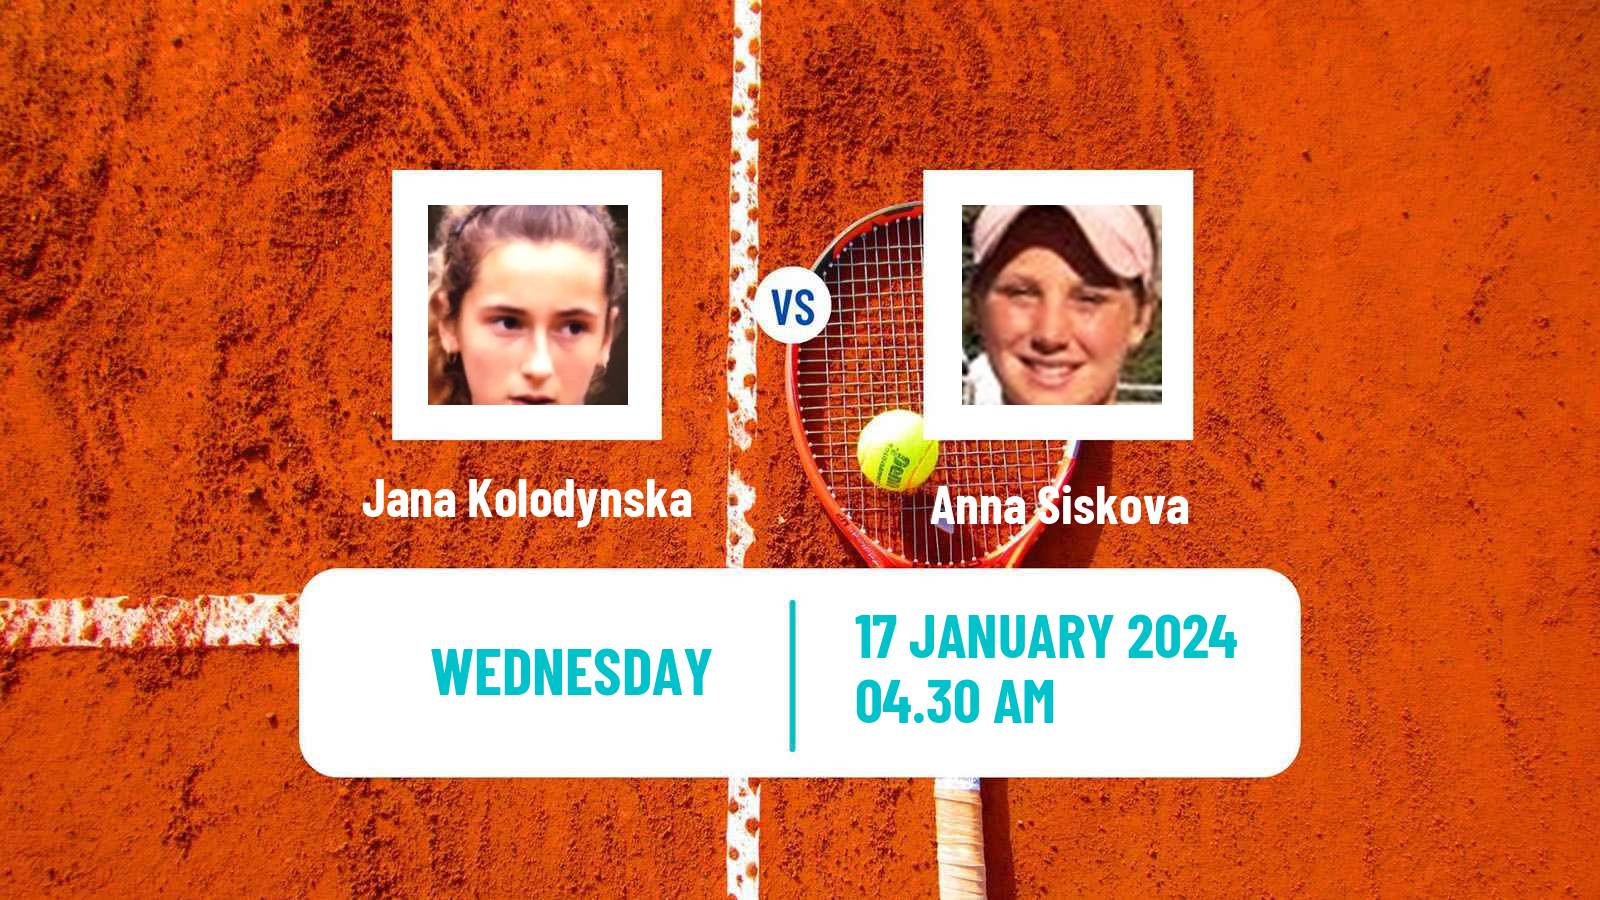 Tennis ITF W50 Bengaluru Women Jana Kolodynska - Anna Siskova